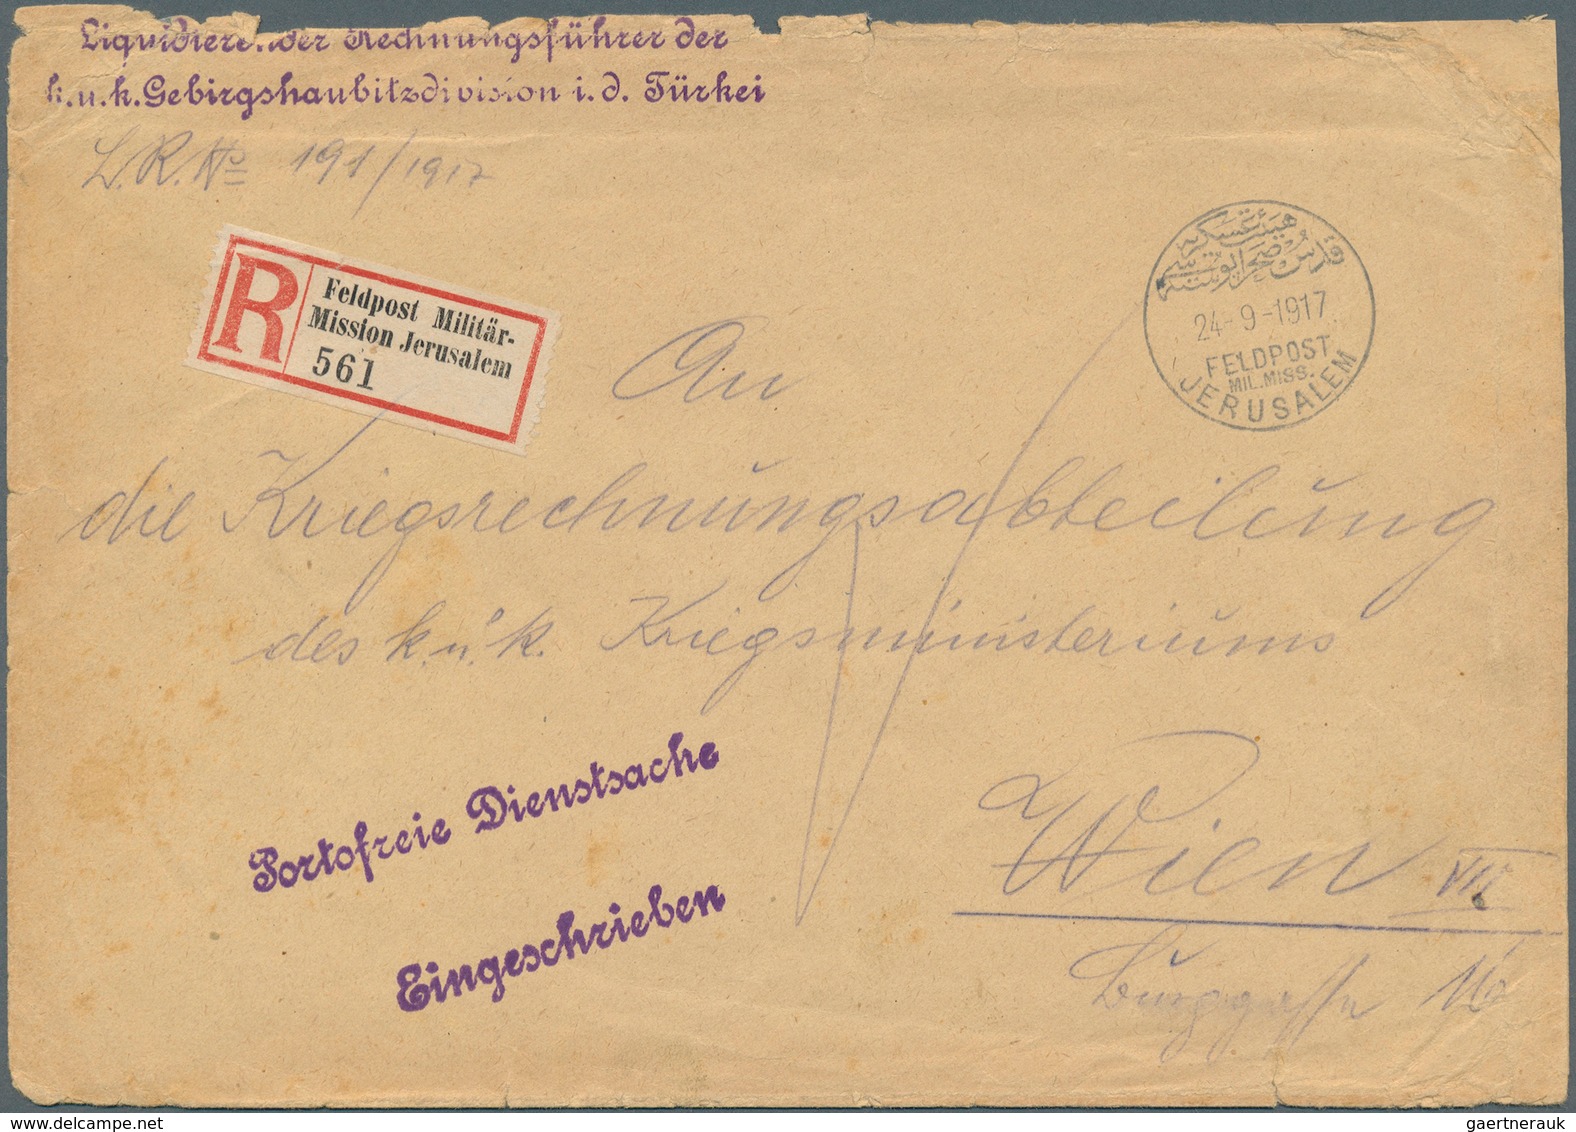 00341 Holyland: 1917, Registered Cover "Portofreie Dienstsache" From "JERUSALEM FELDPOST MIL.MISSION 24.9. - Palästina